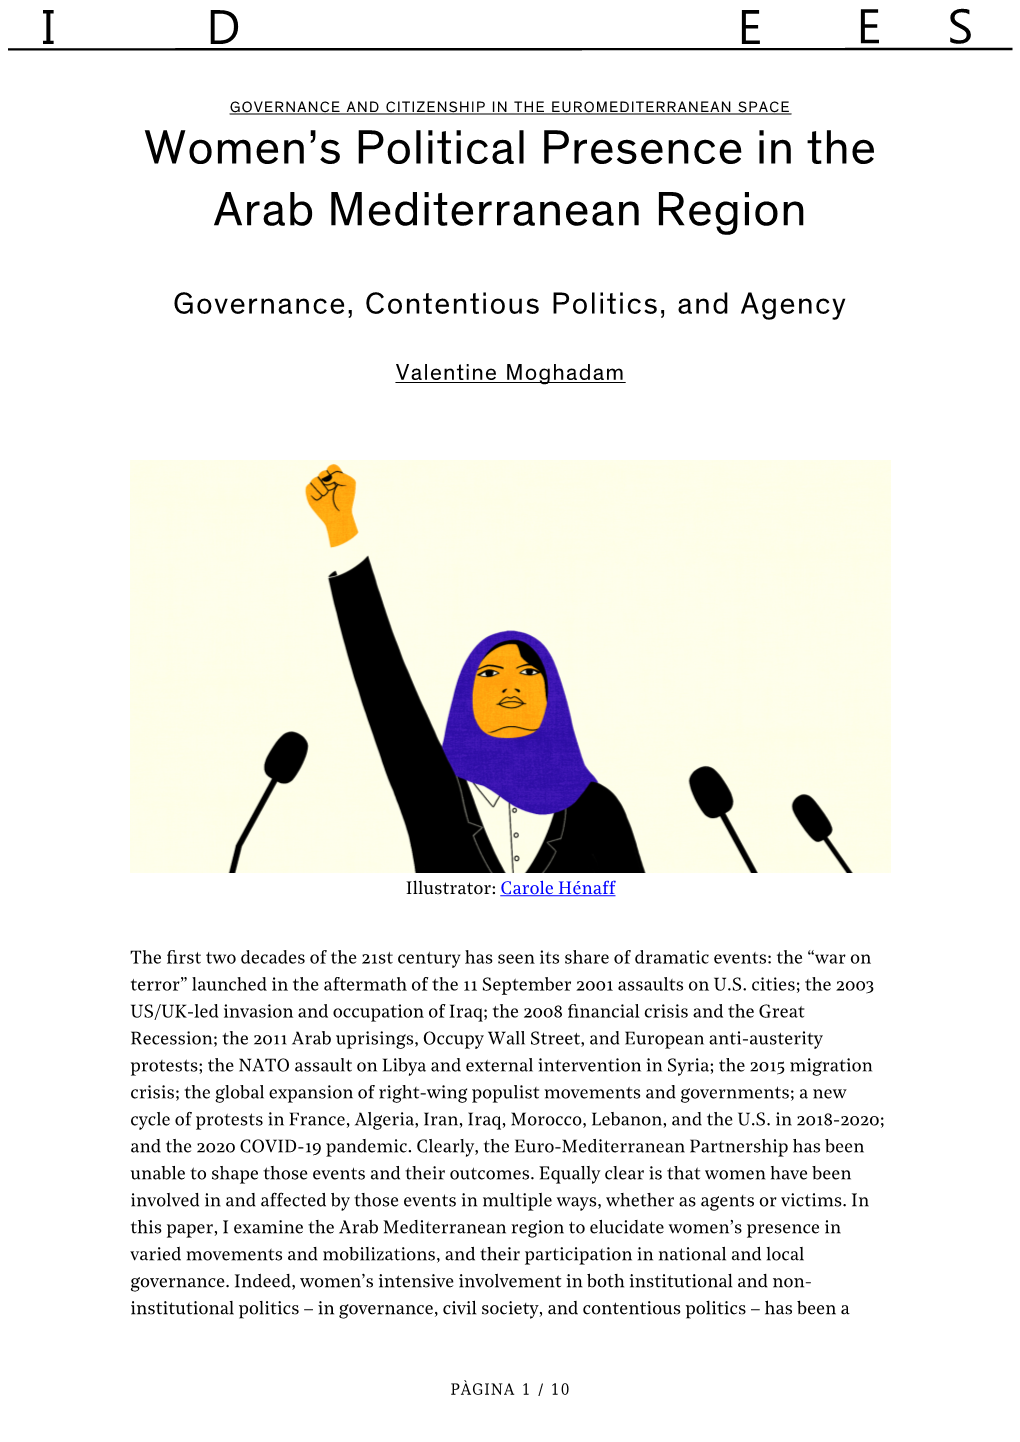 Women's Political Presence in the Arab Mediterranean Region